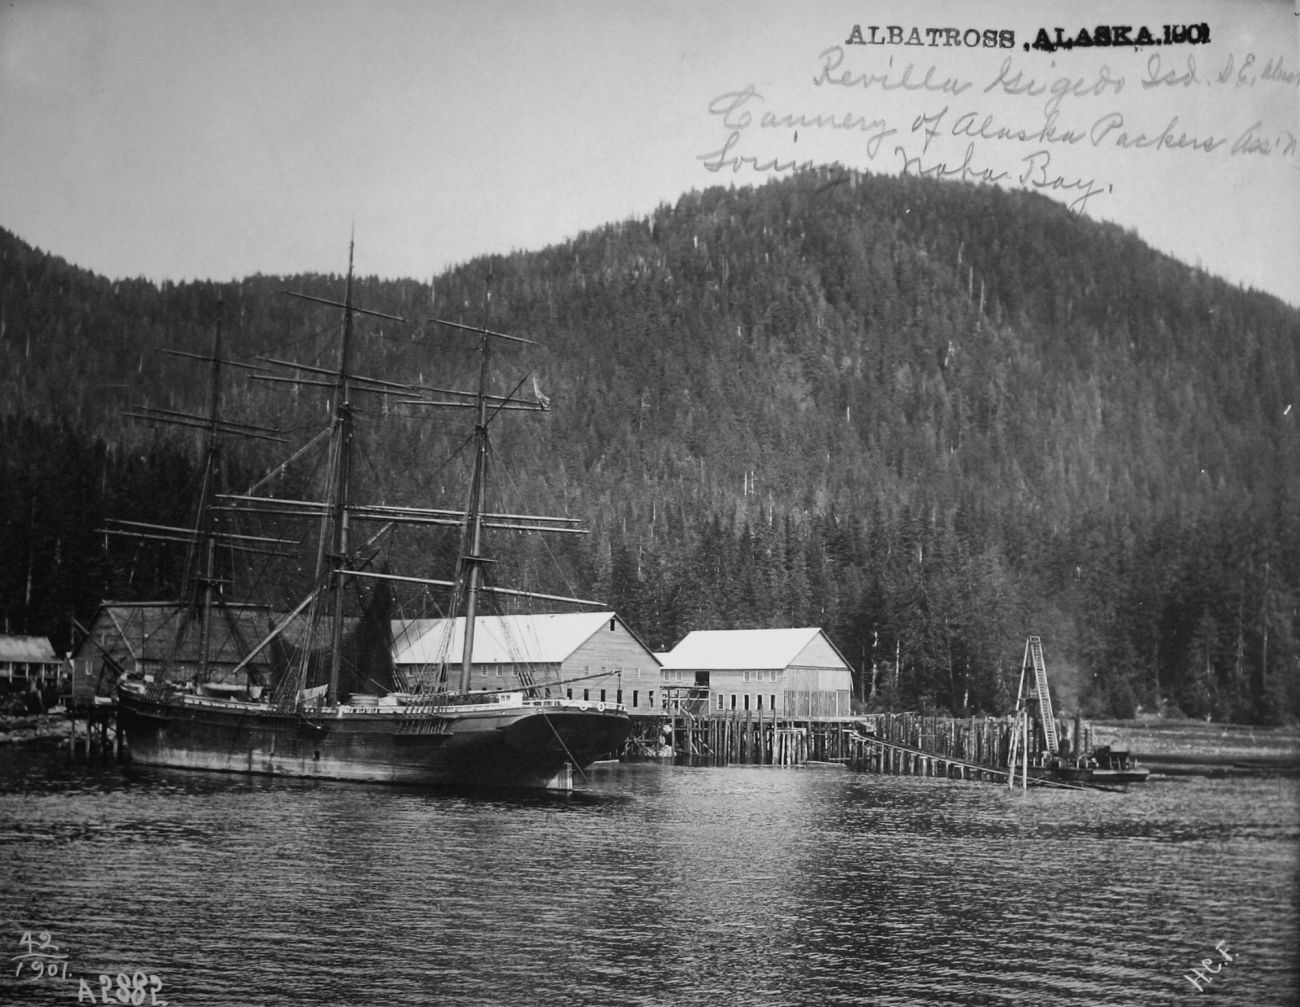 Albatross, AK, 1901, Revilla Gigedo Isd